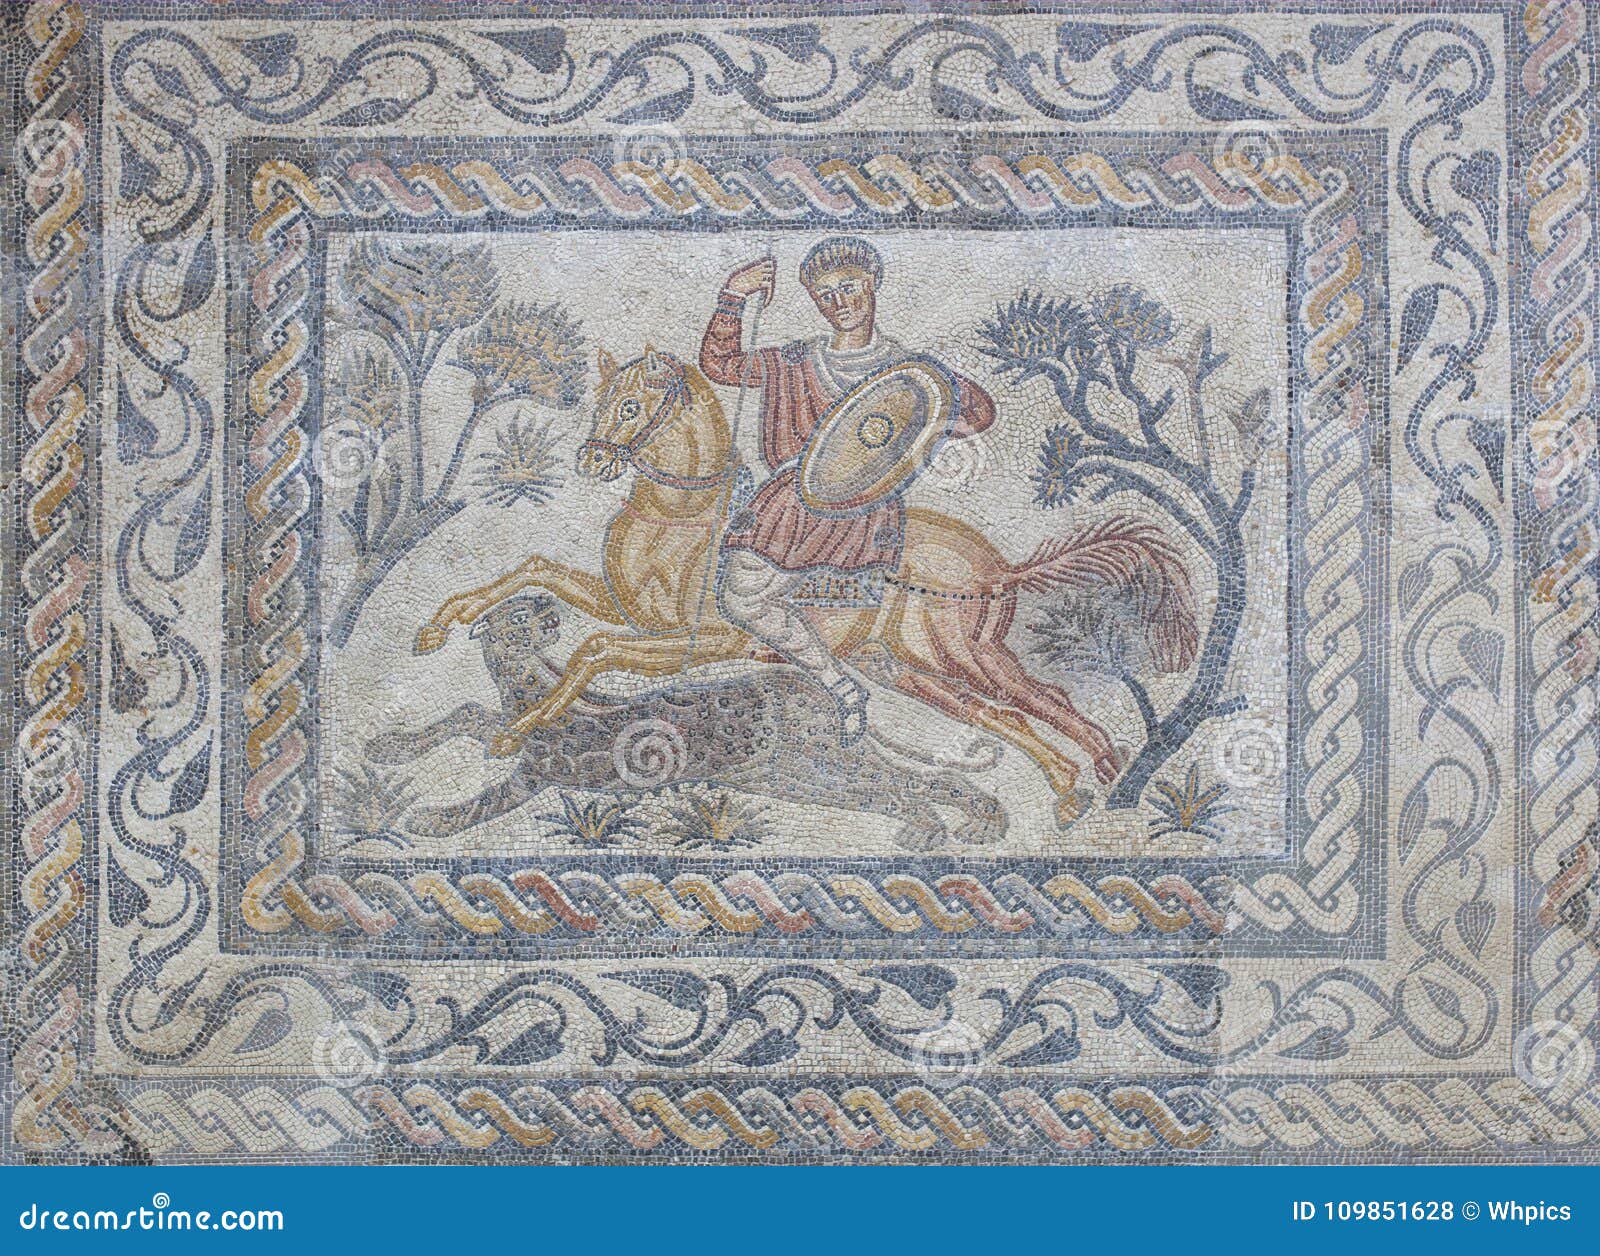 panther hunter roman mosaic or venatio